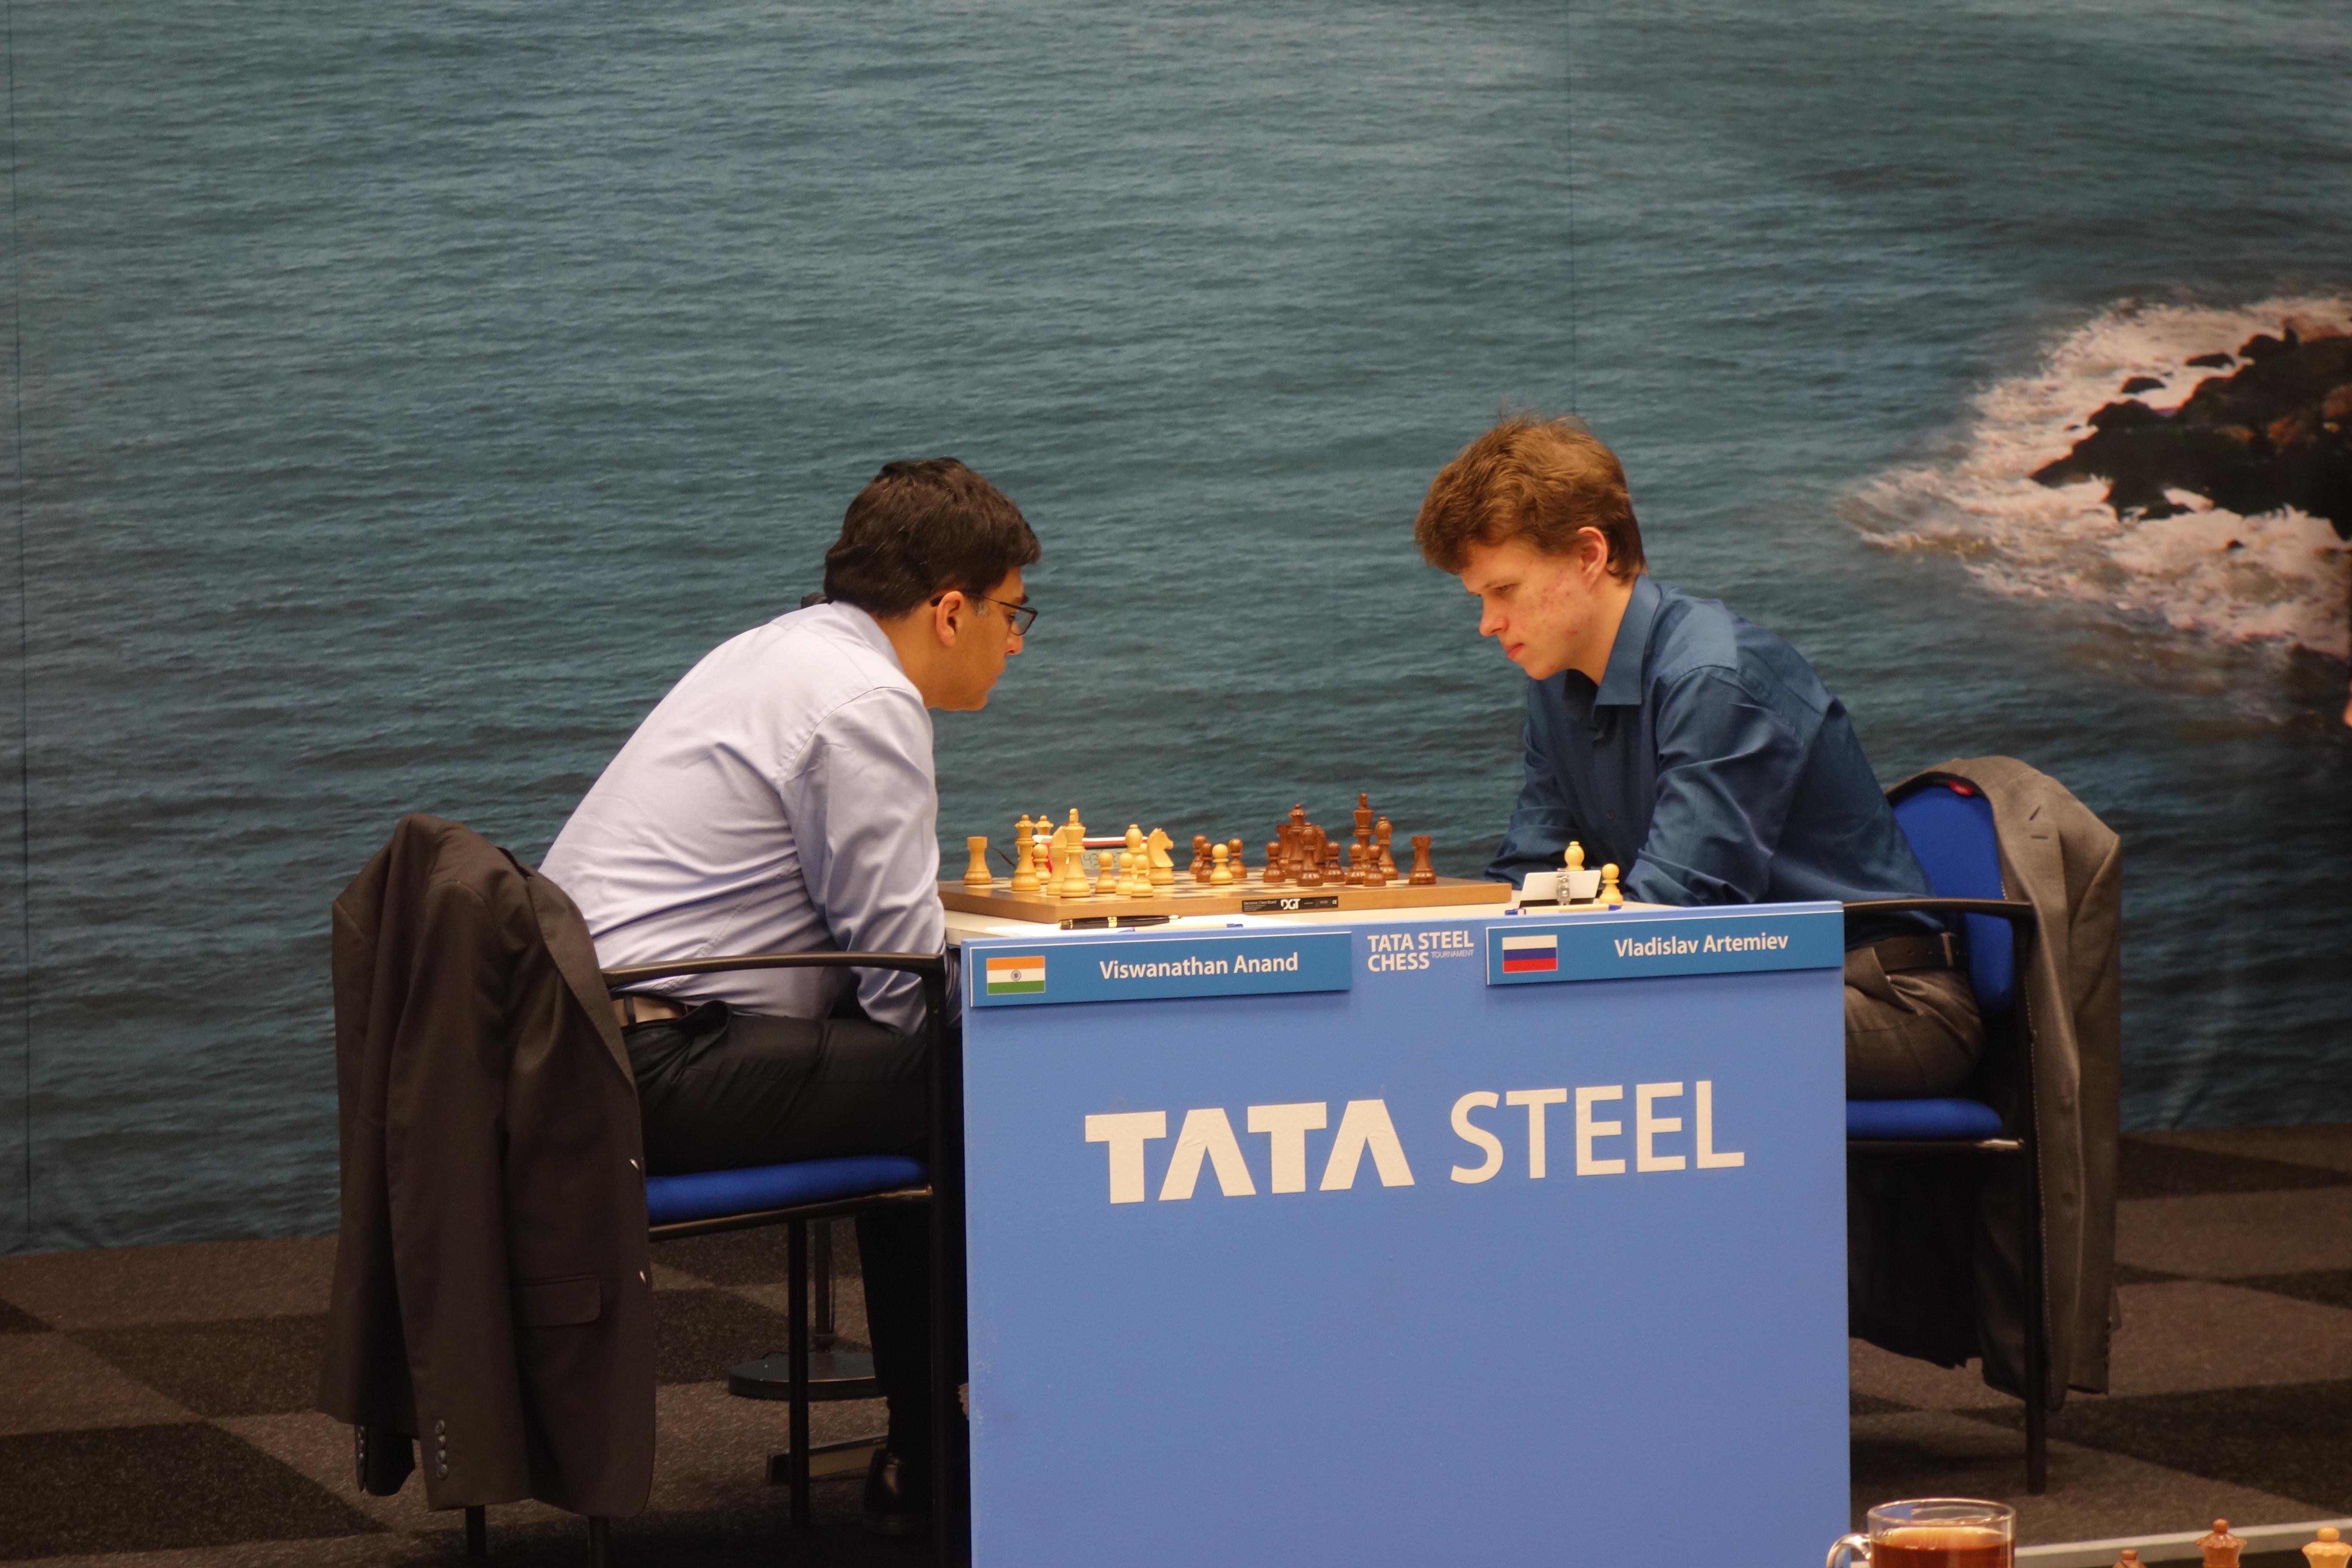 Tata Steel Chess Tournament 2020 - Wikipedia